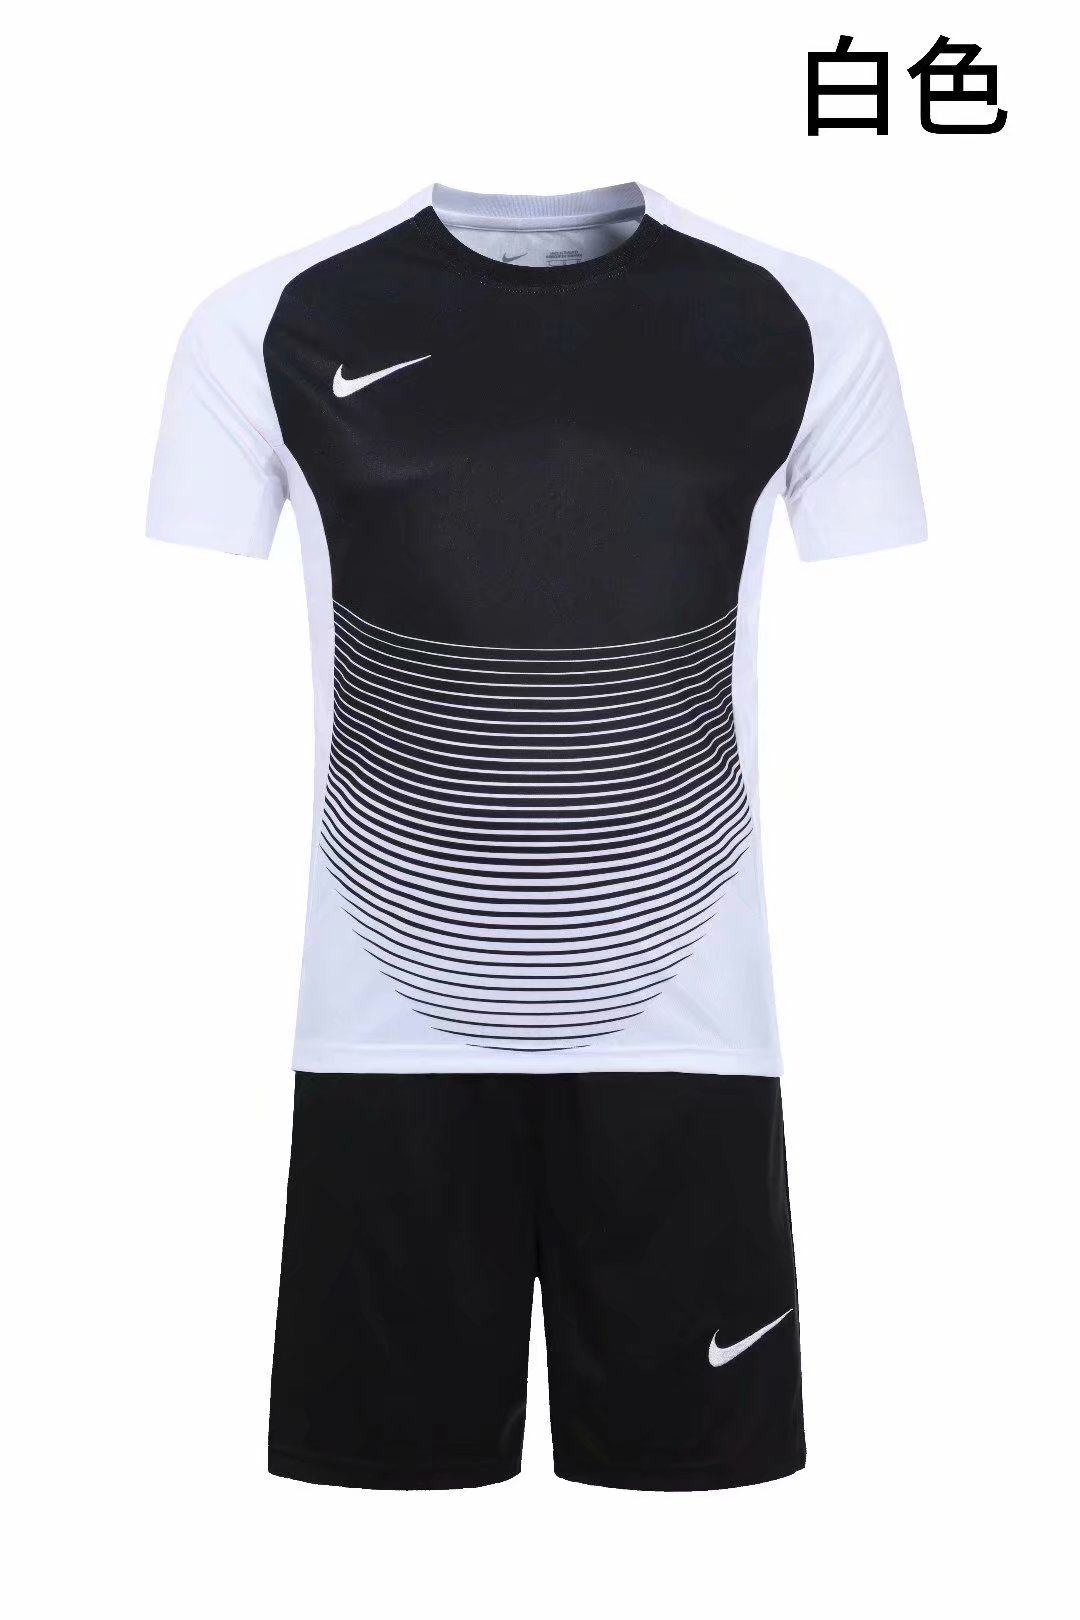 Nike Soccer Team Uniforms 013